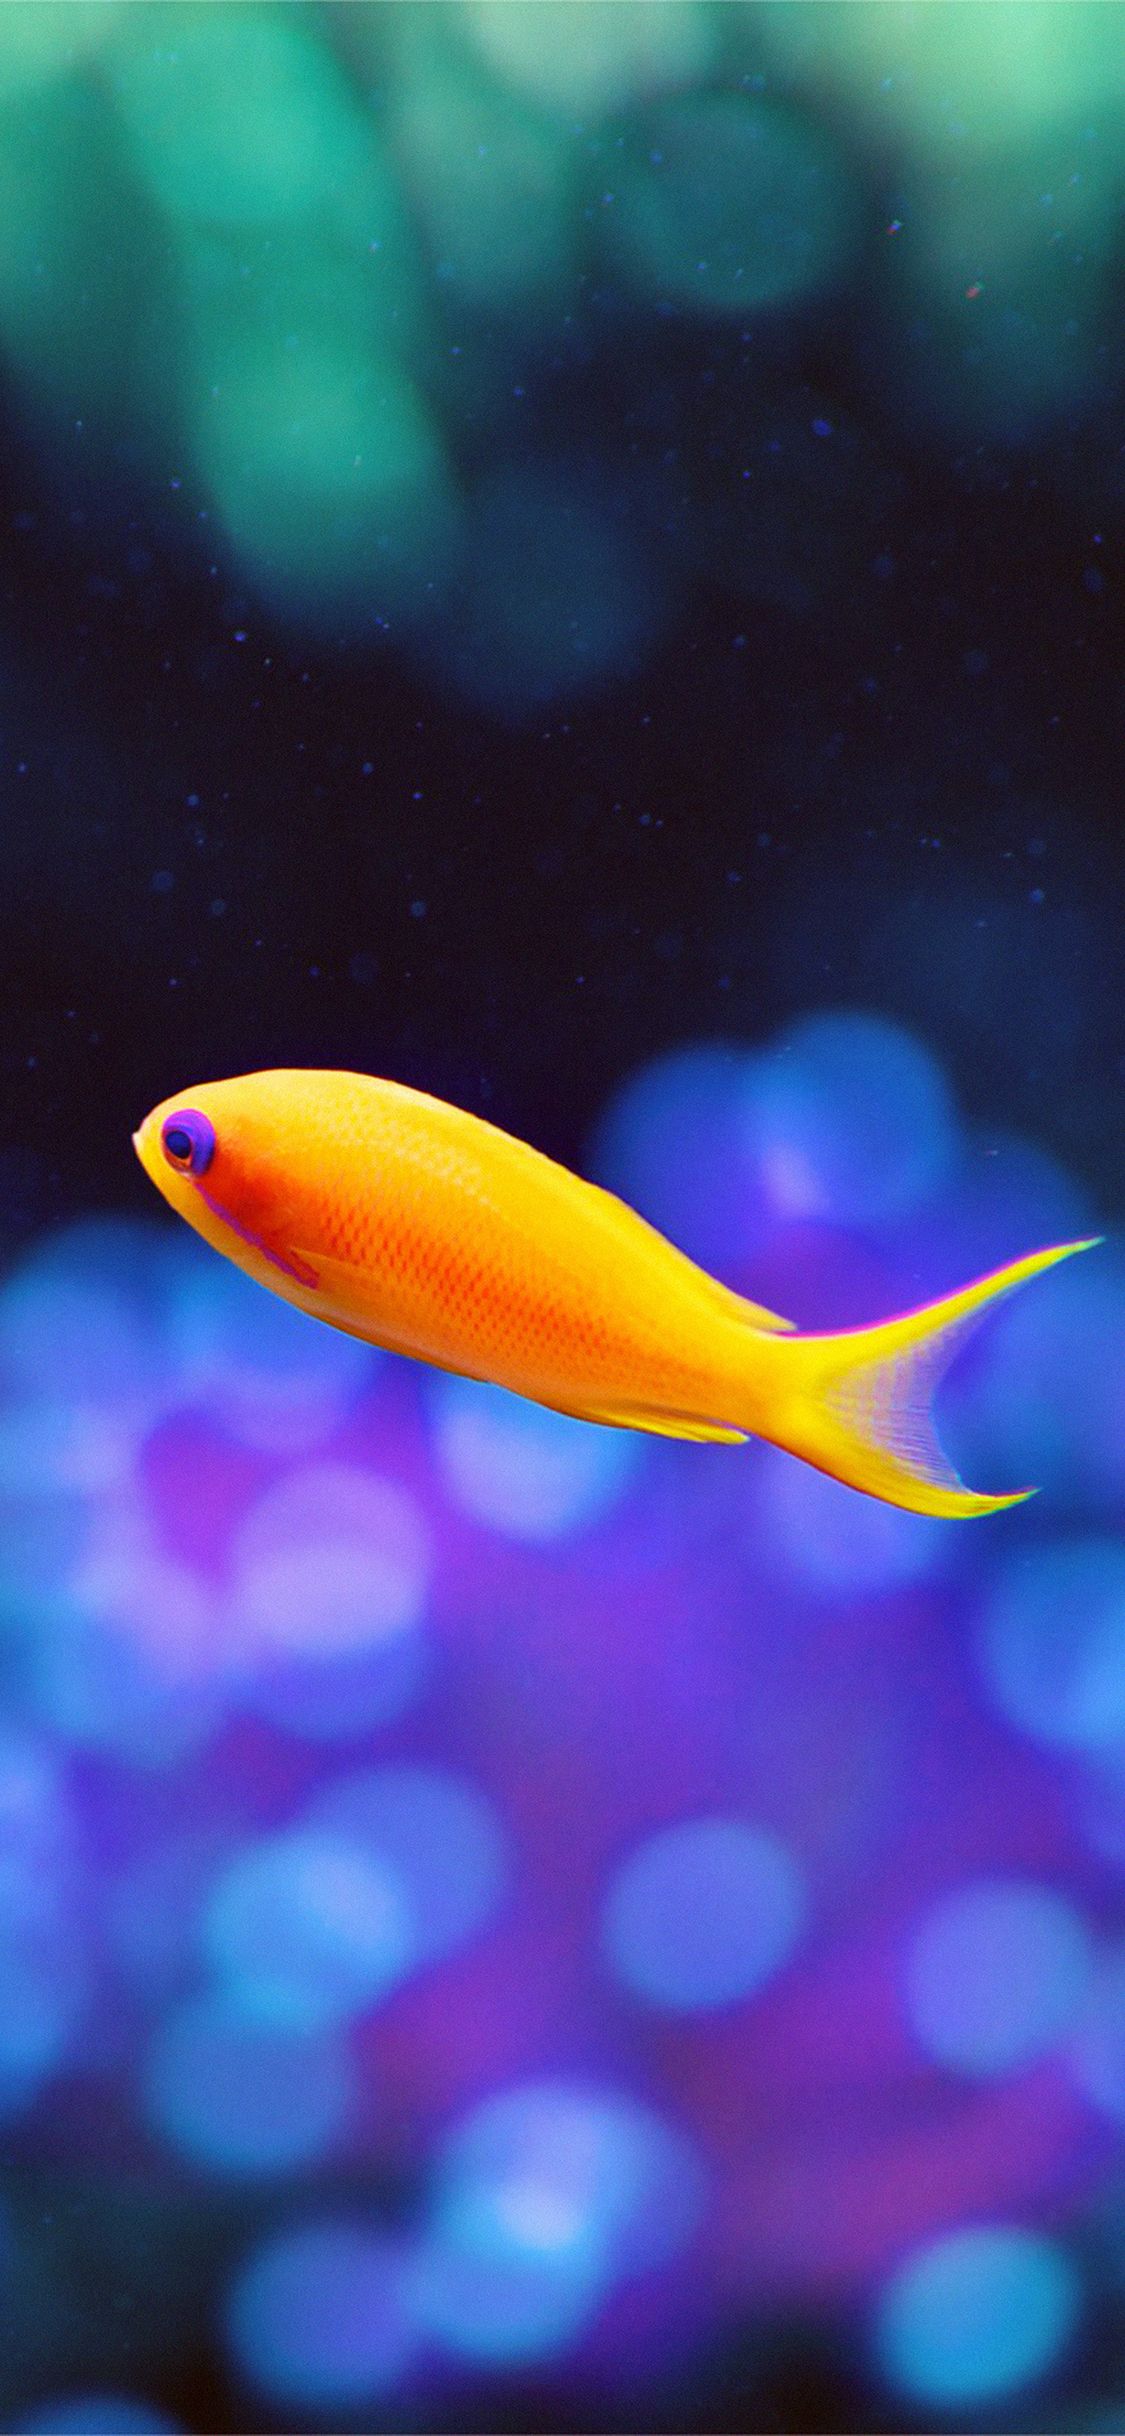 iPhone X wallpaper. cute fish nemo ocean